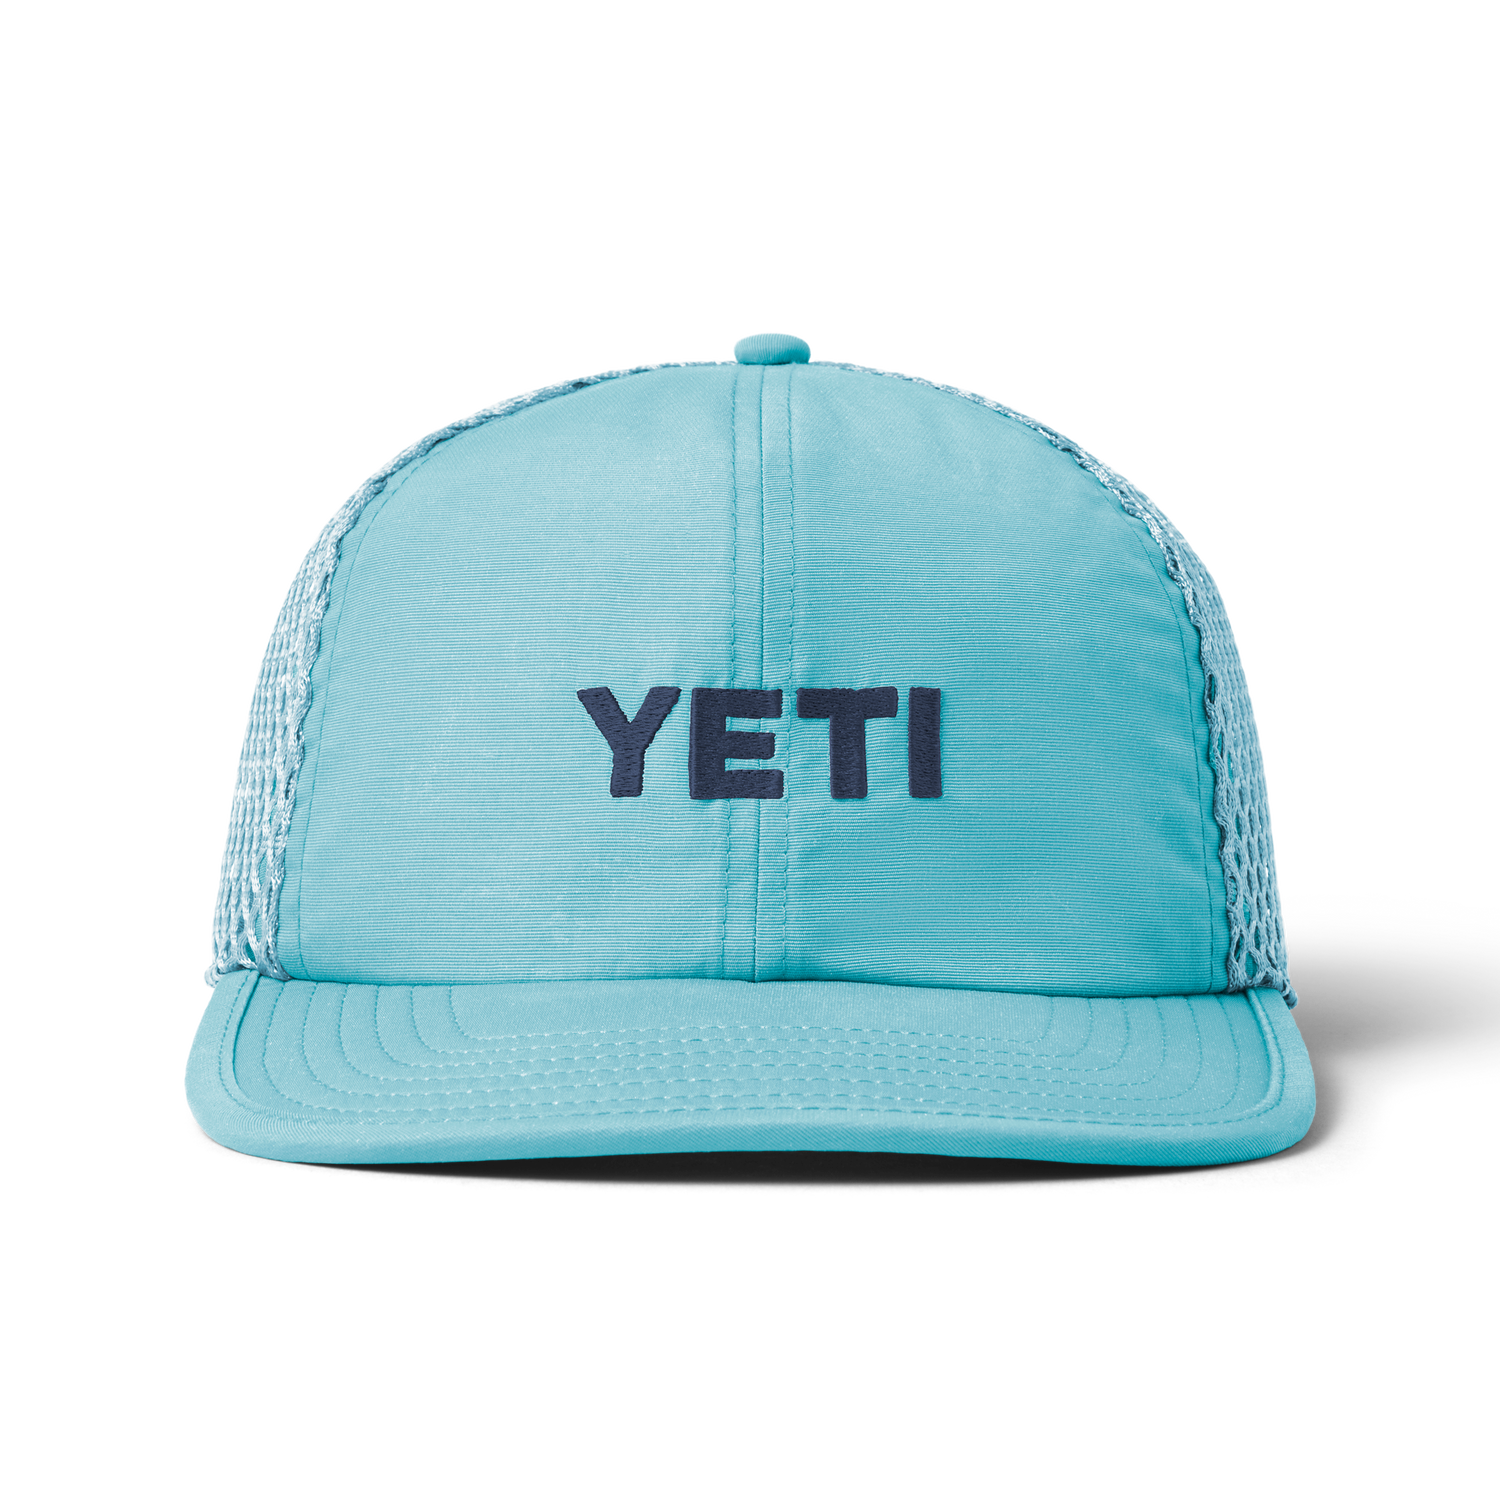 Buy Collection Yeti Hats - Yeti Factory Store Wholesale